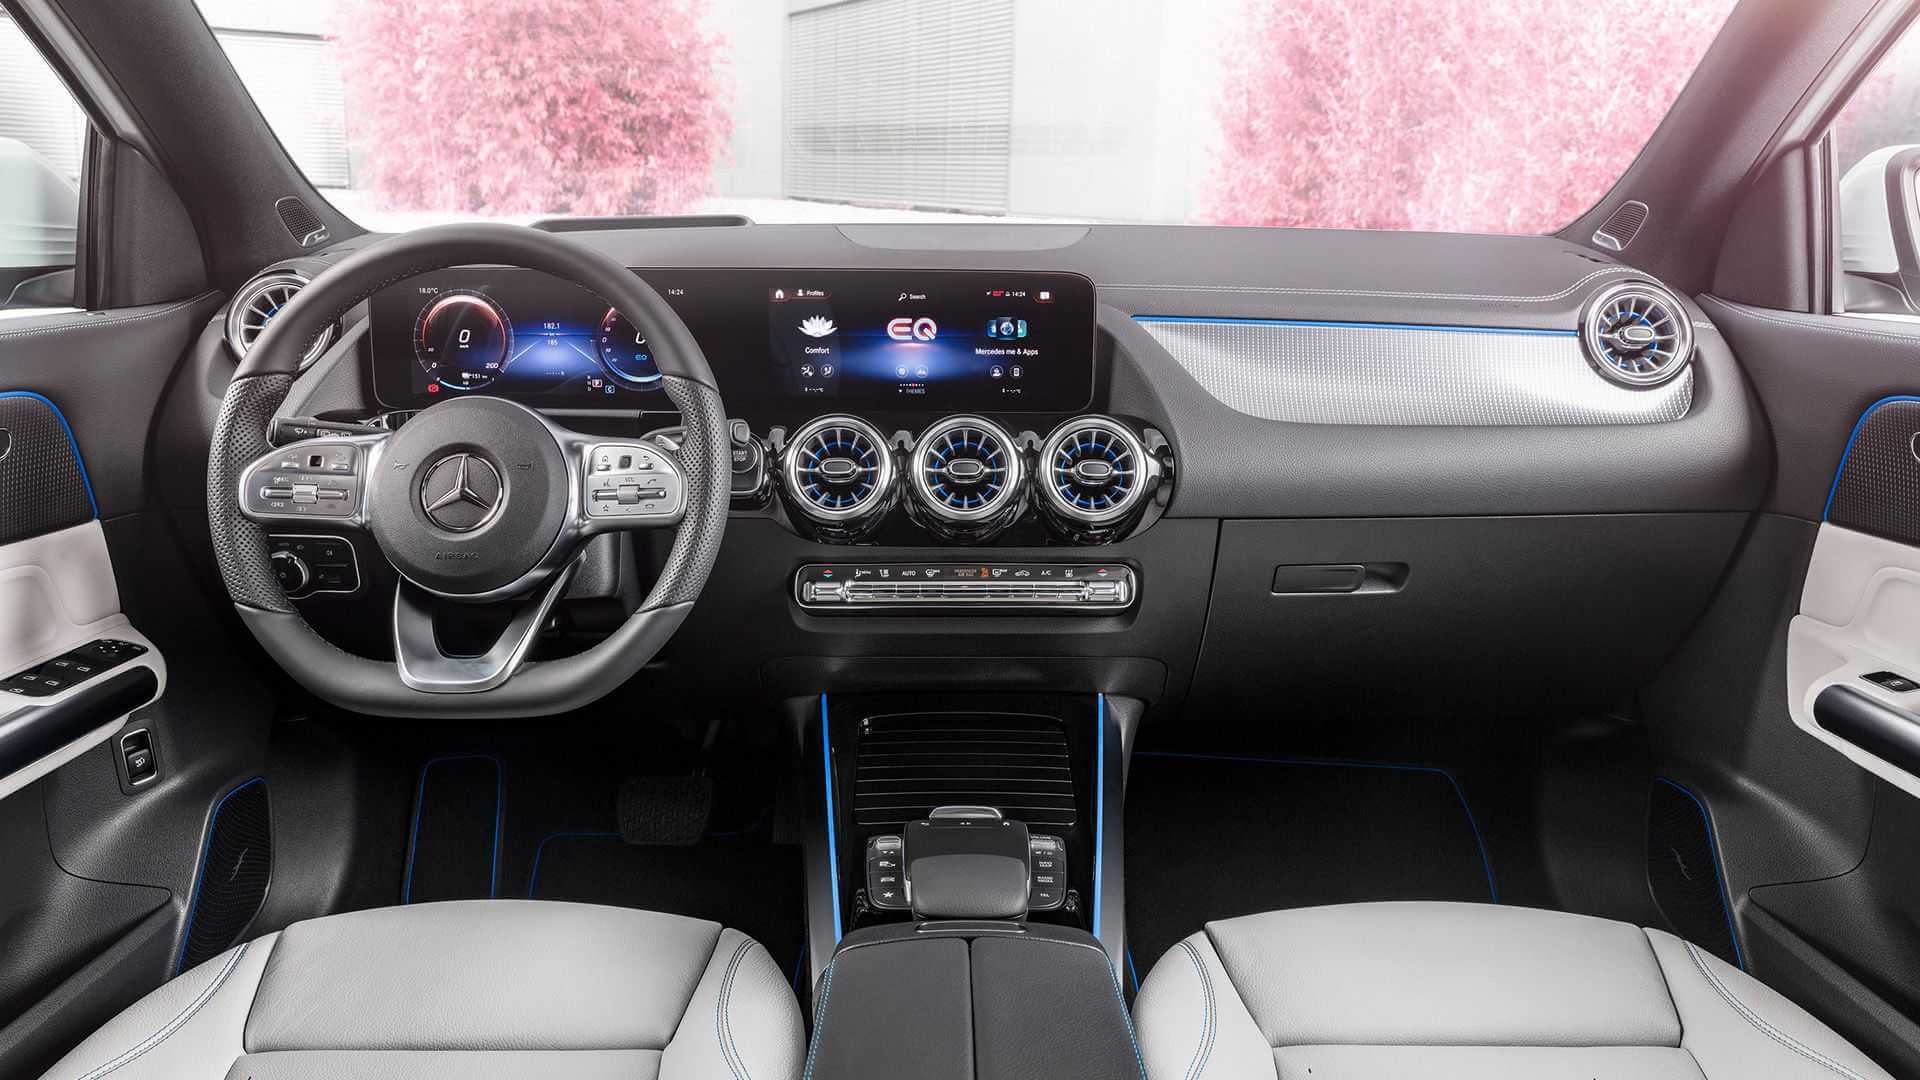 Mercedes-Benz'in Uygun Fiyatlı Elektrikli Otomobili EQA Tanıtıldı